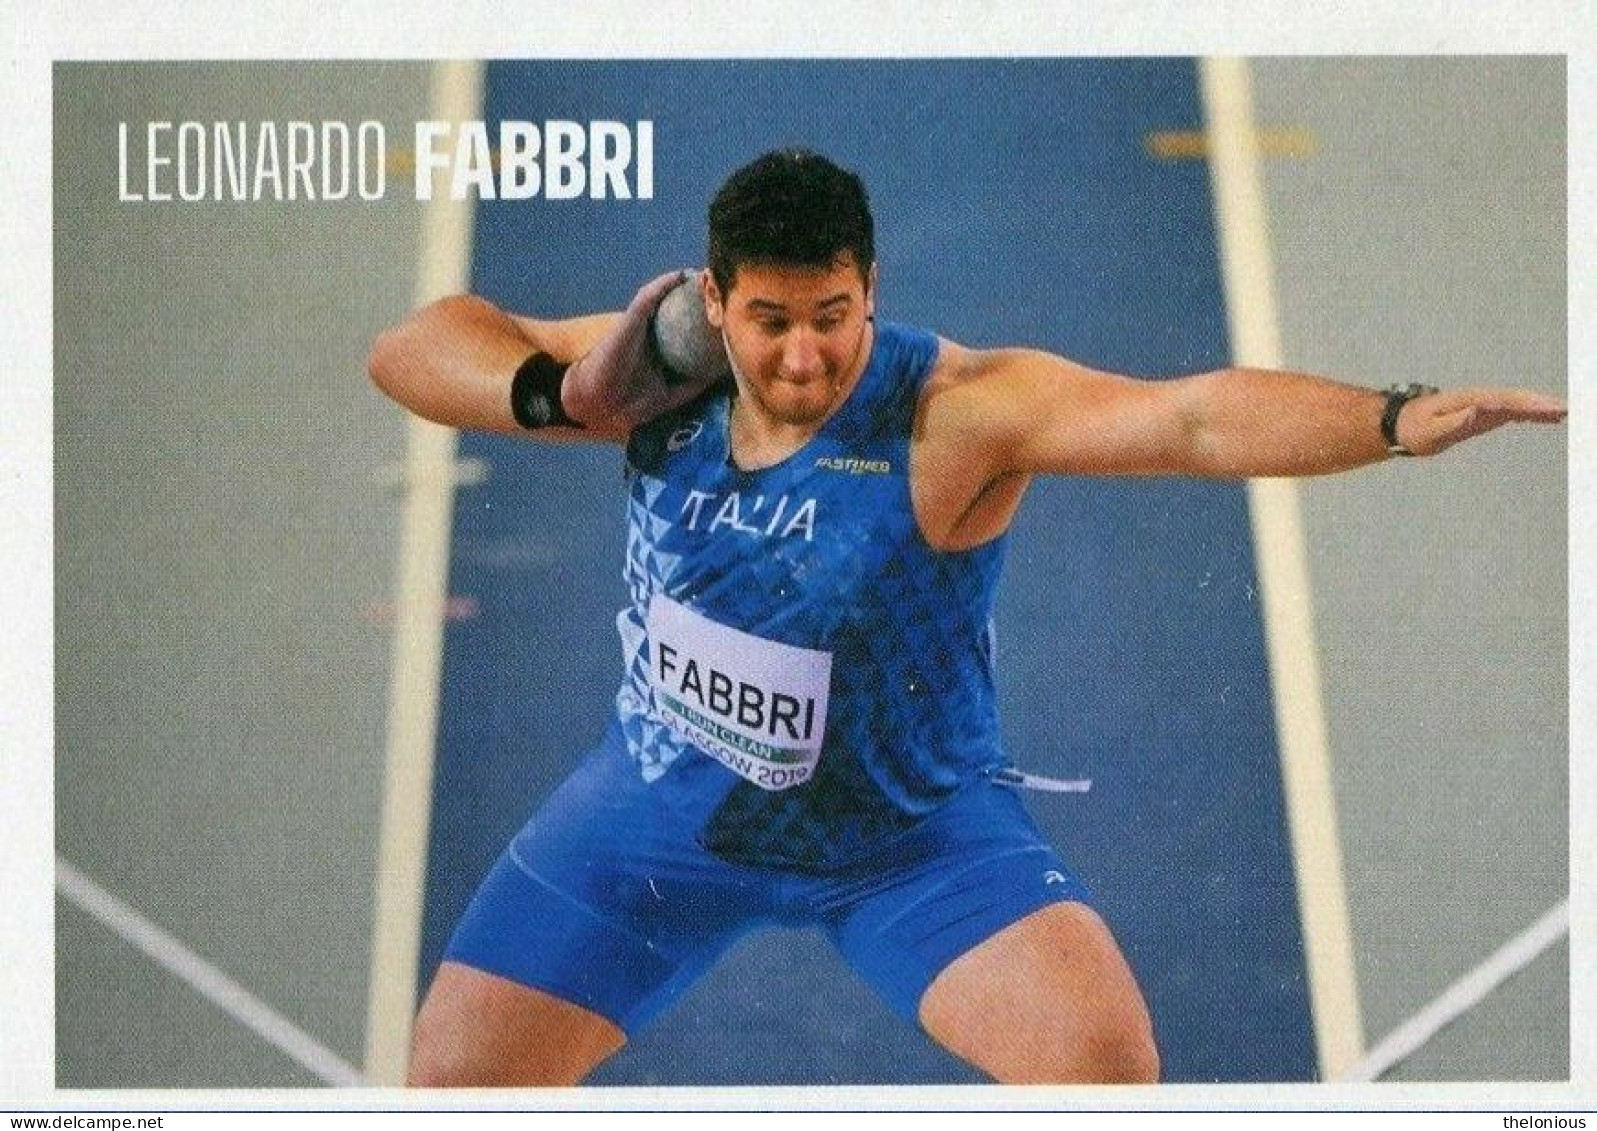 # LEONARDO FABBRI - N. 31 - ESSELUNGA SUPER CHAMPS, TOKYO 2020 - Athlétisme